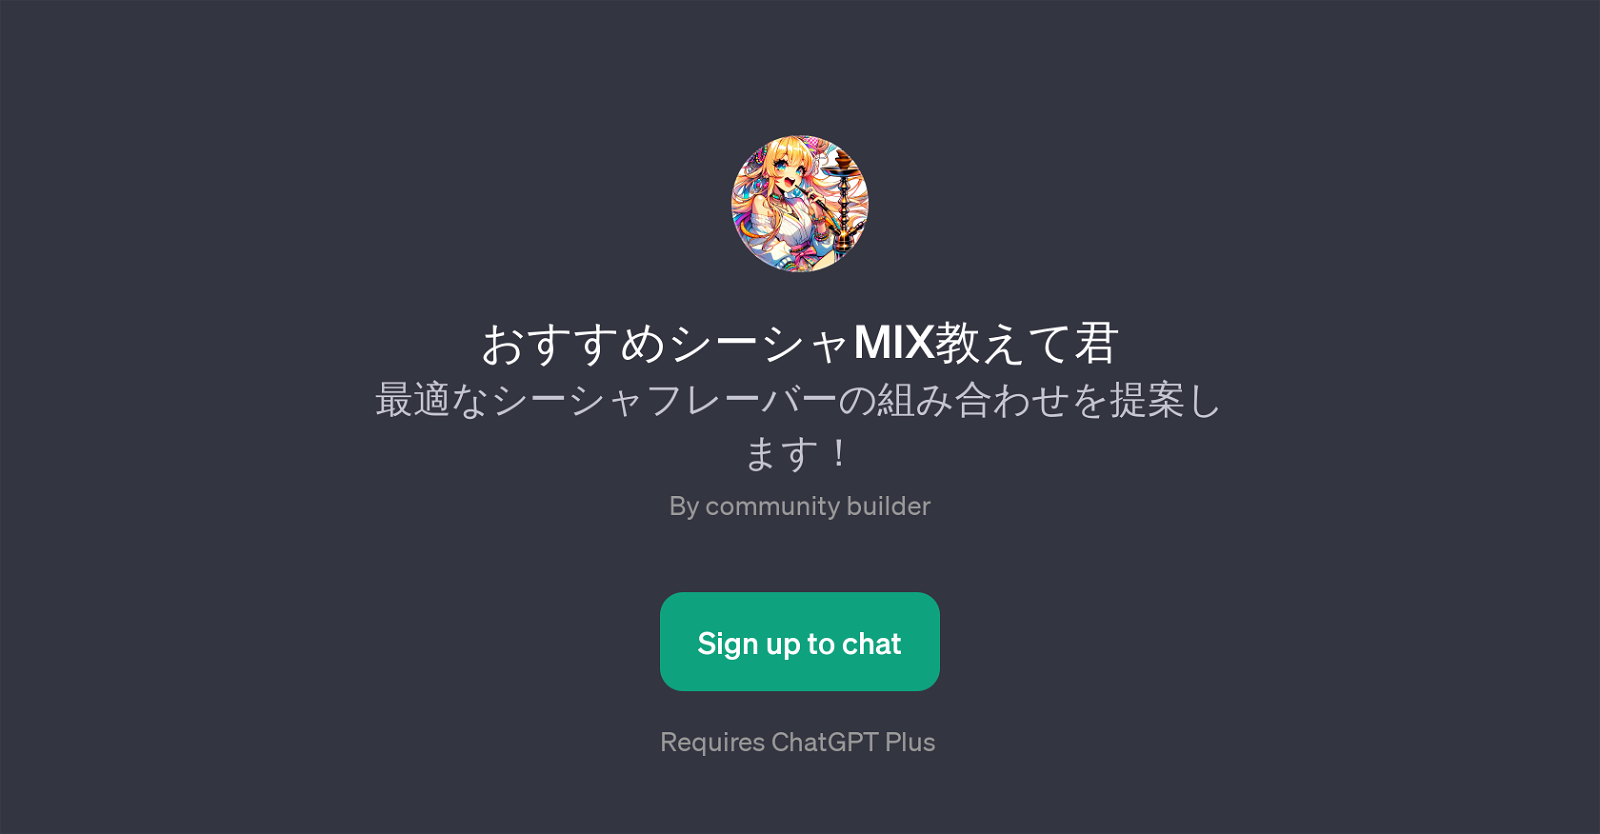 MIX website